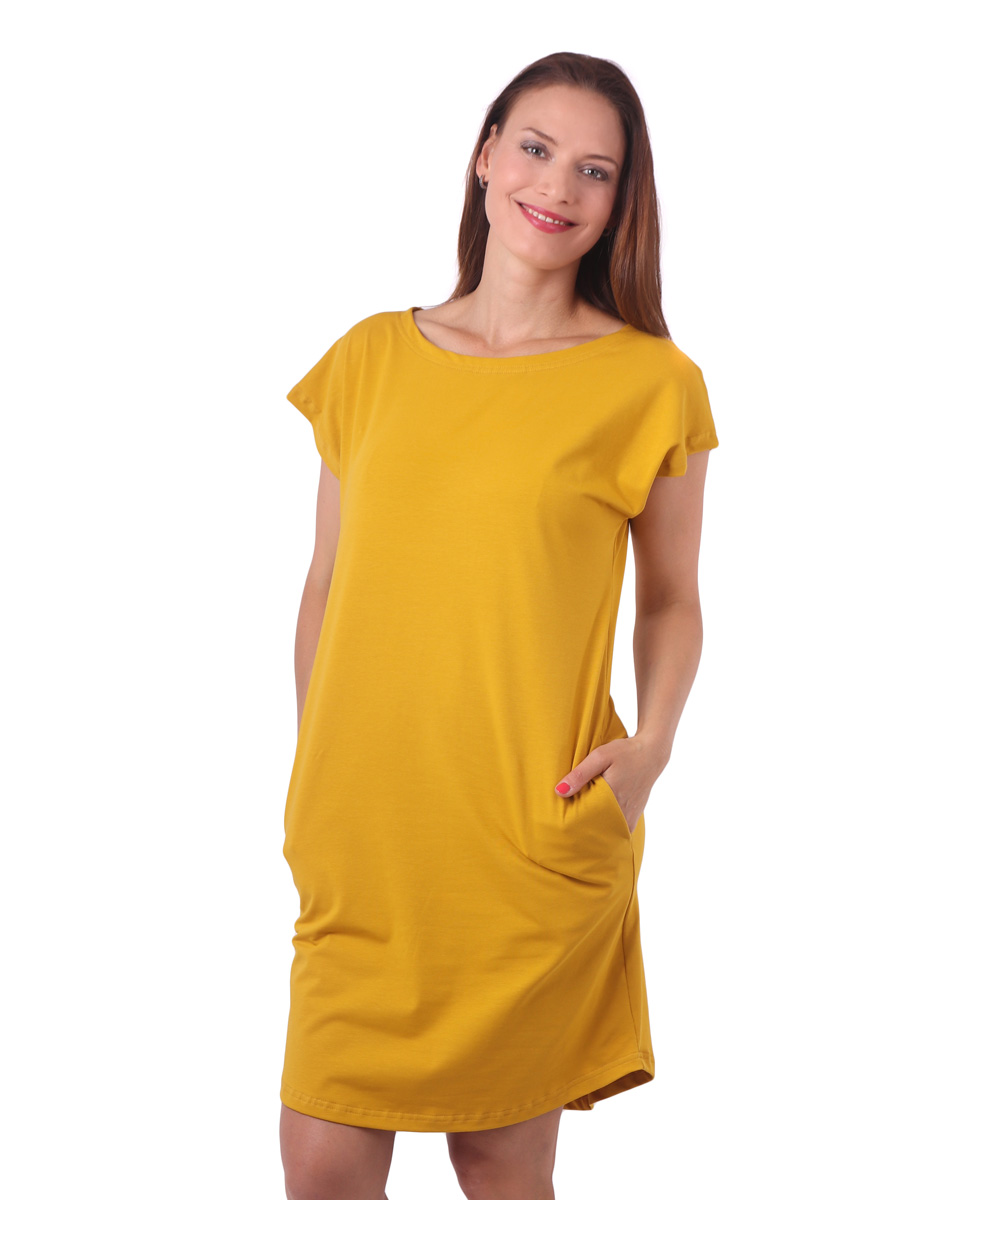 Women's dress with pockets Zoe, oversized loose fit, mustard